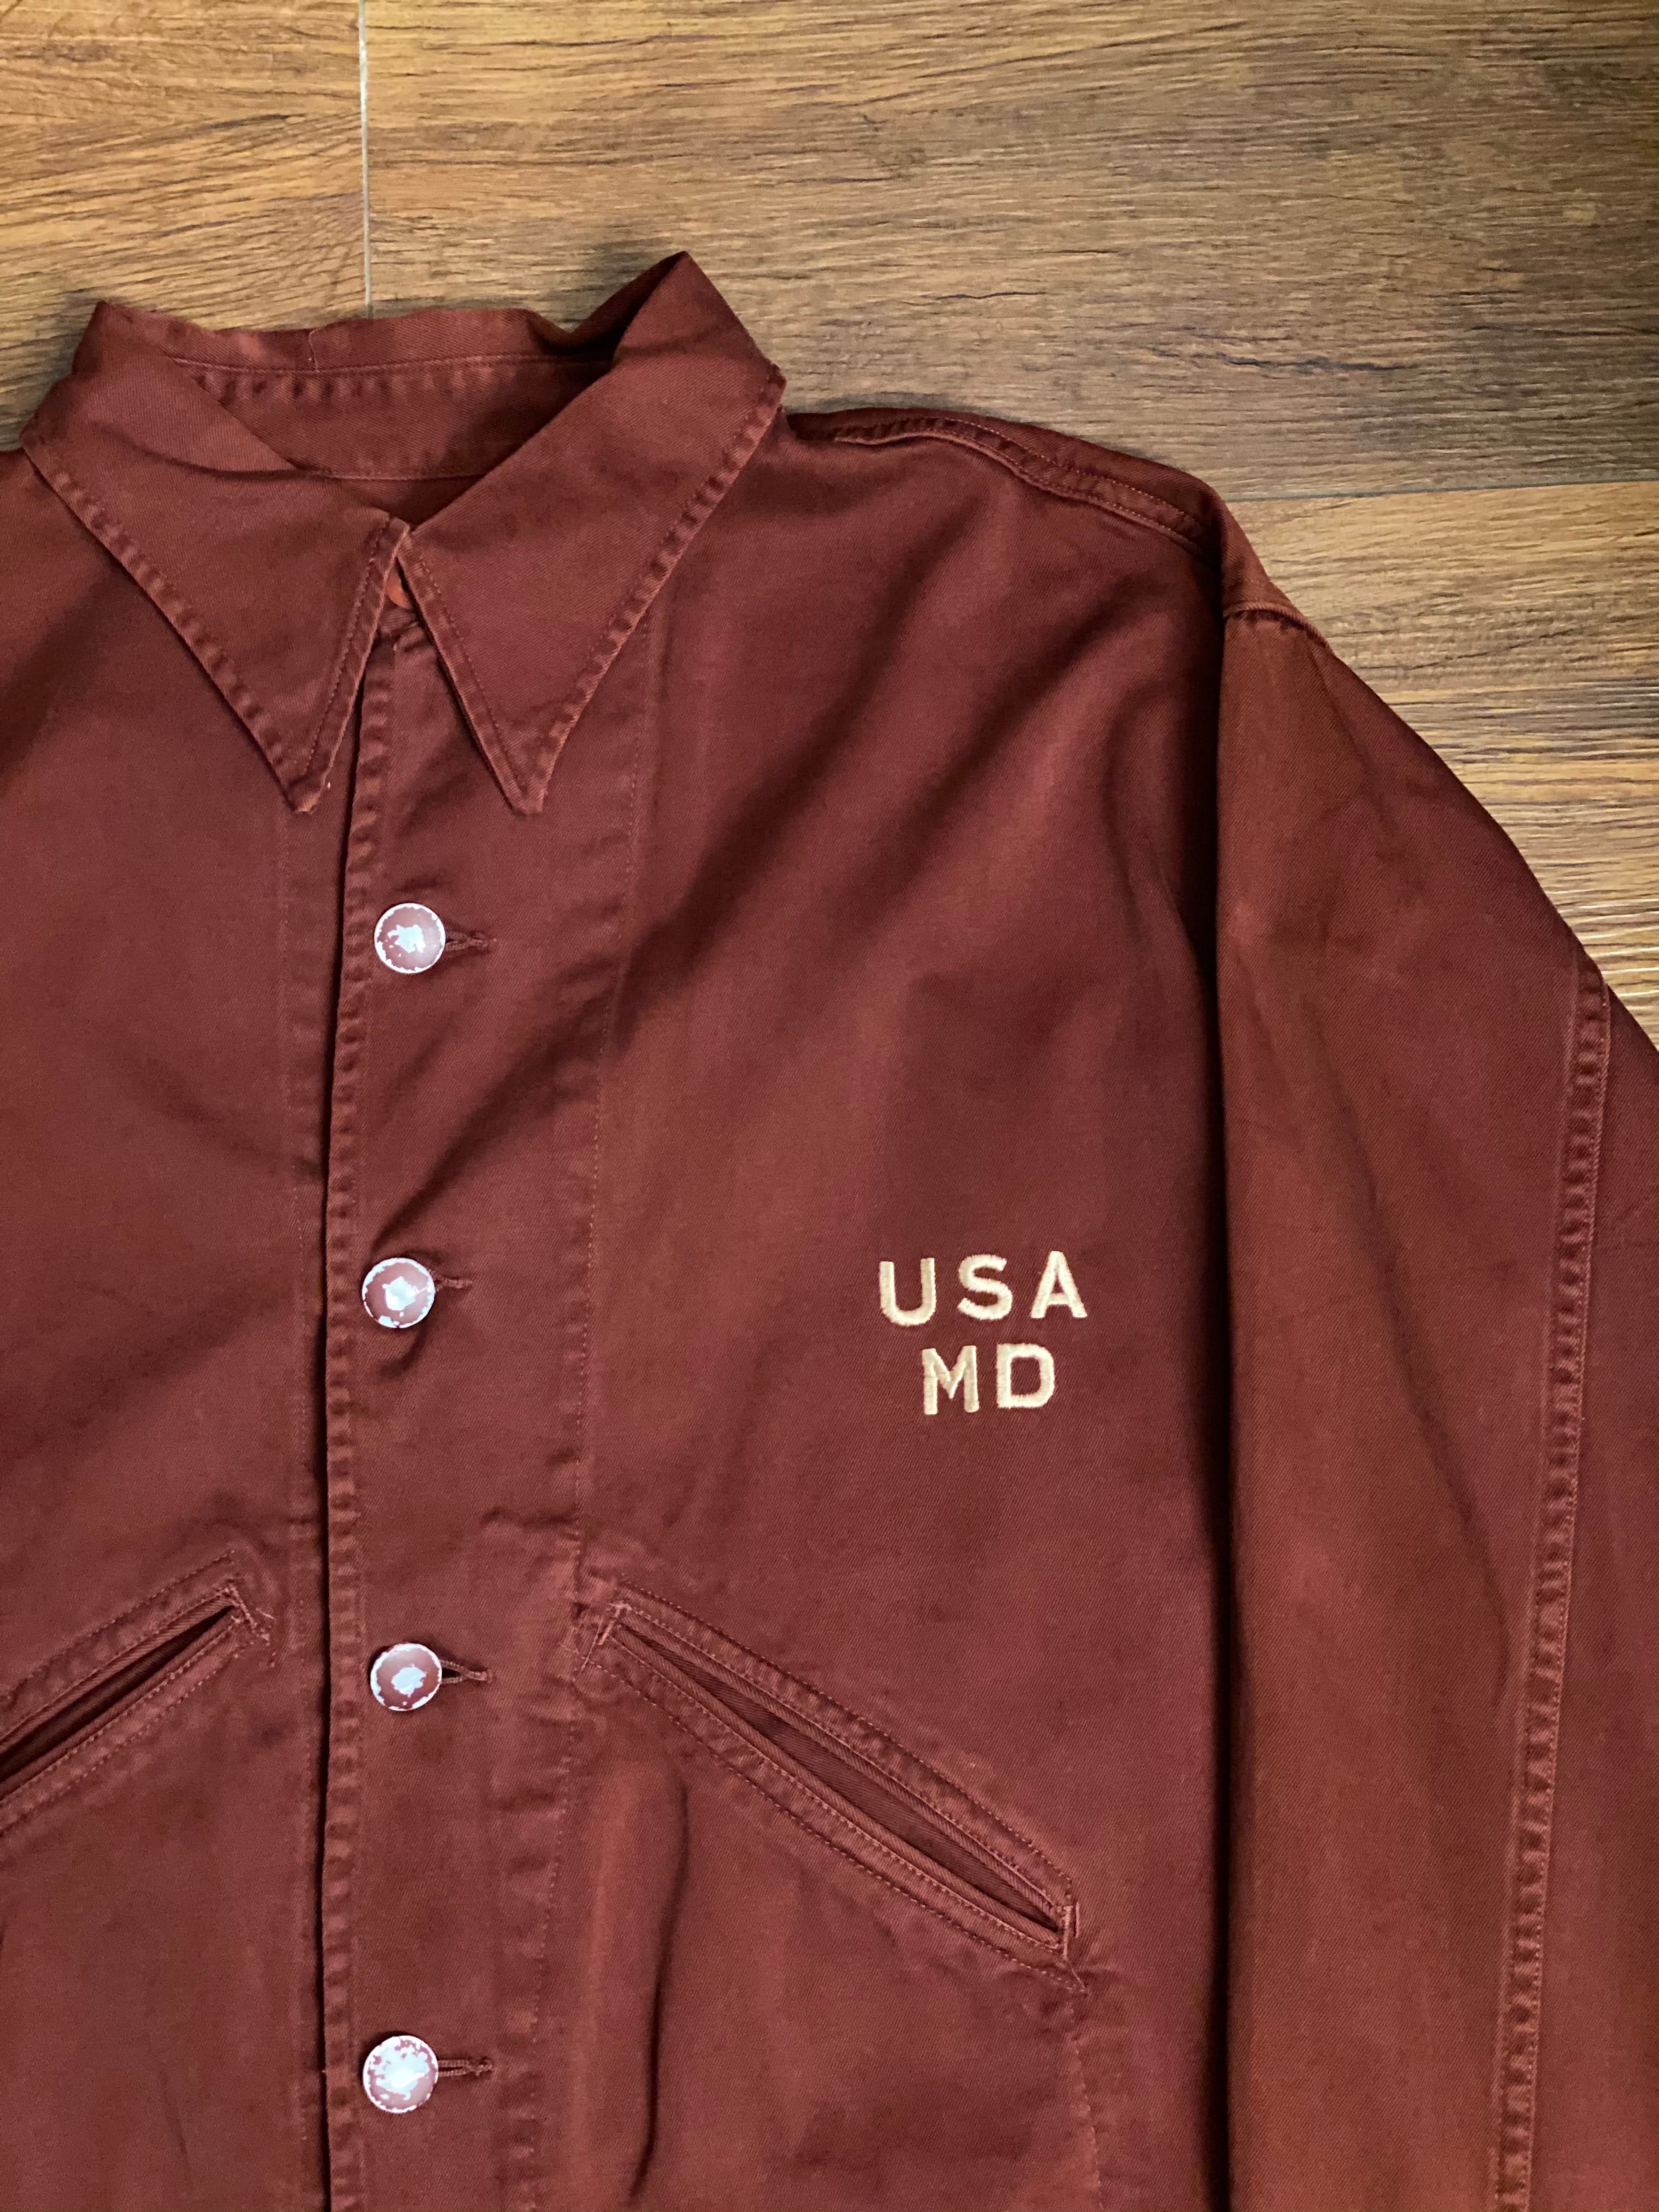 vintage 's US ARMY medical jacket   vintage clothing twoface